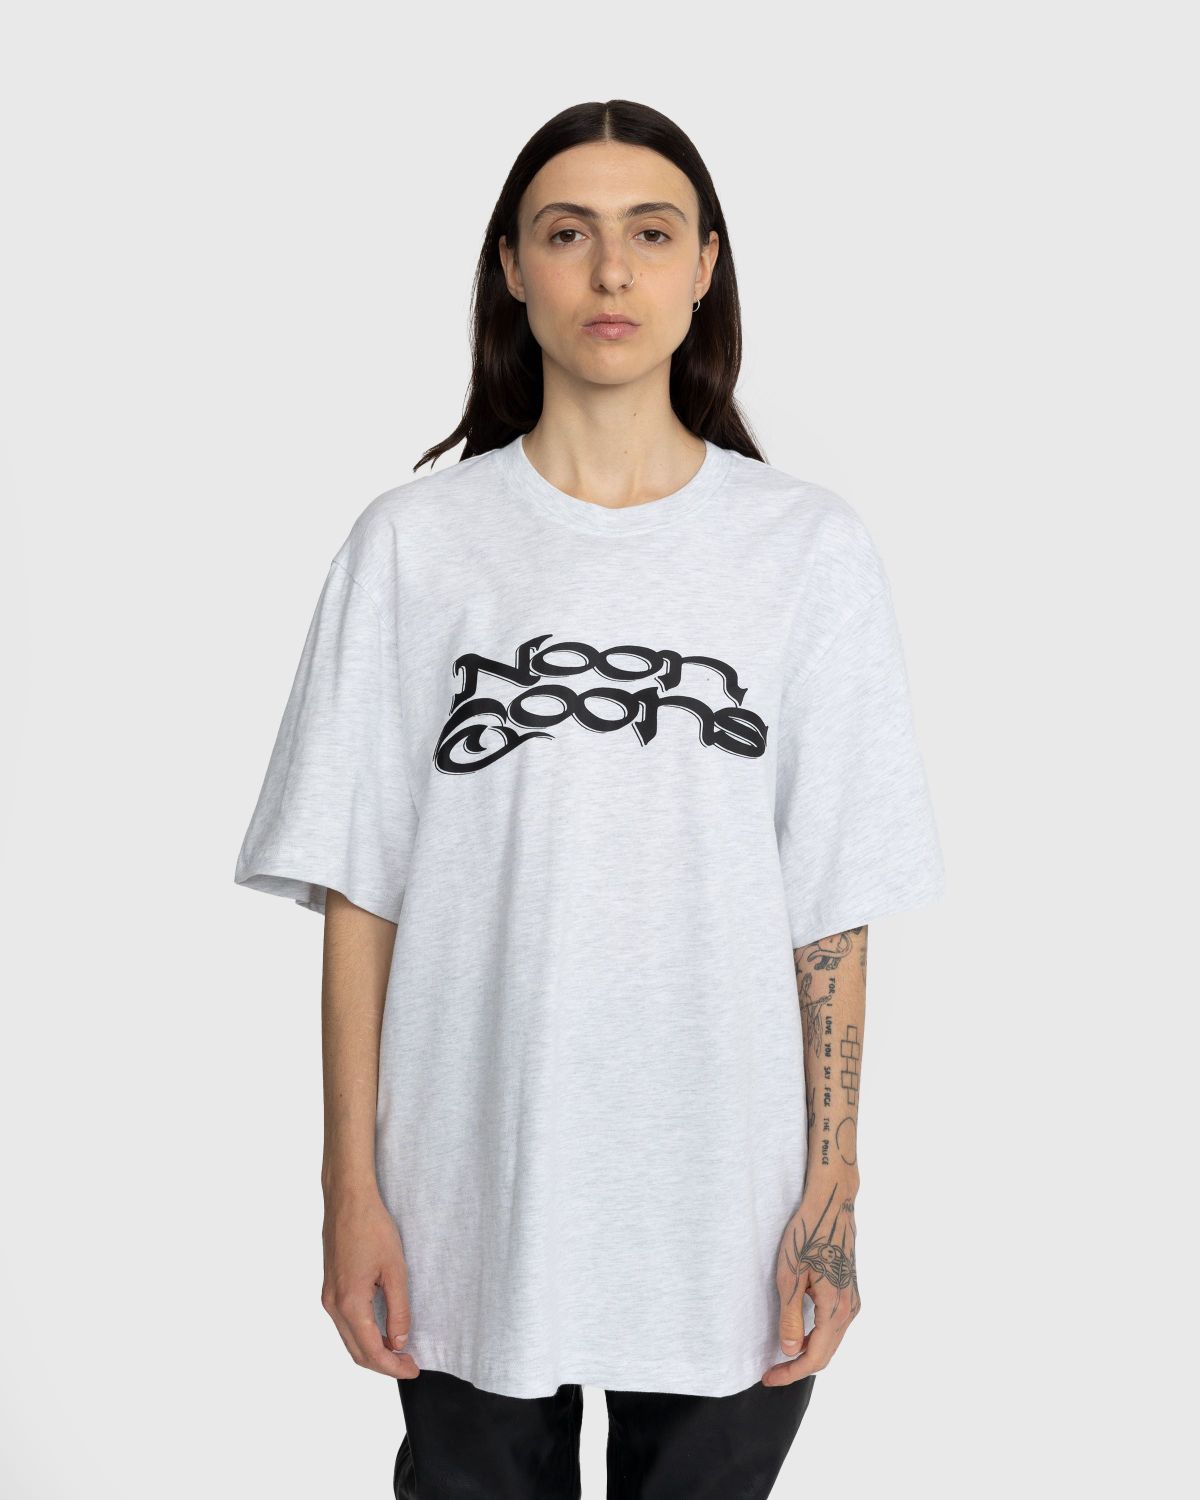 Noon Goons – Wave T-Shirt Grey | Highsnobiety Shop